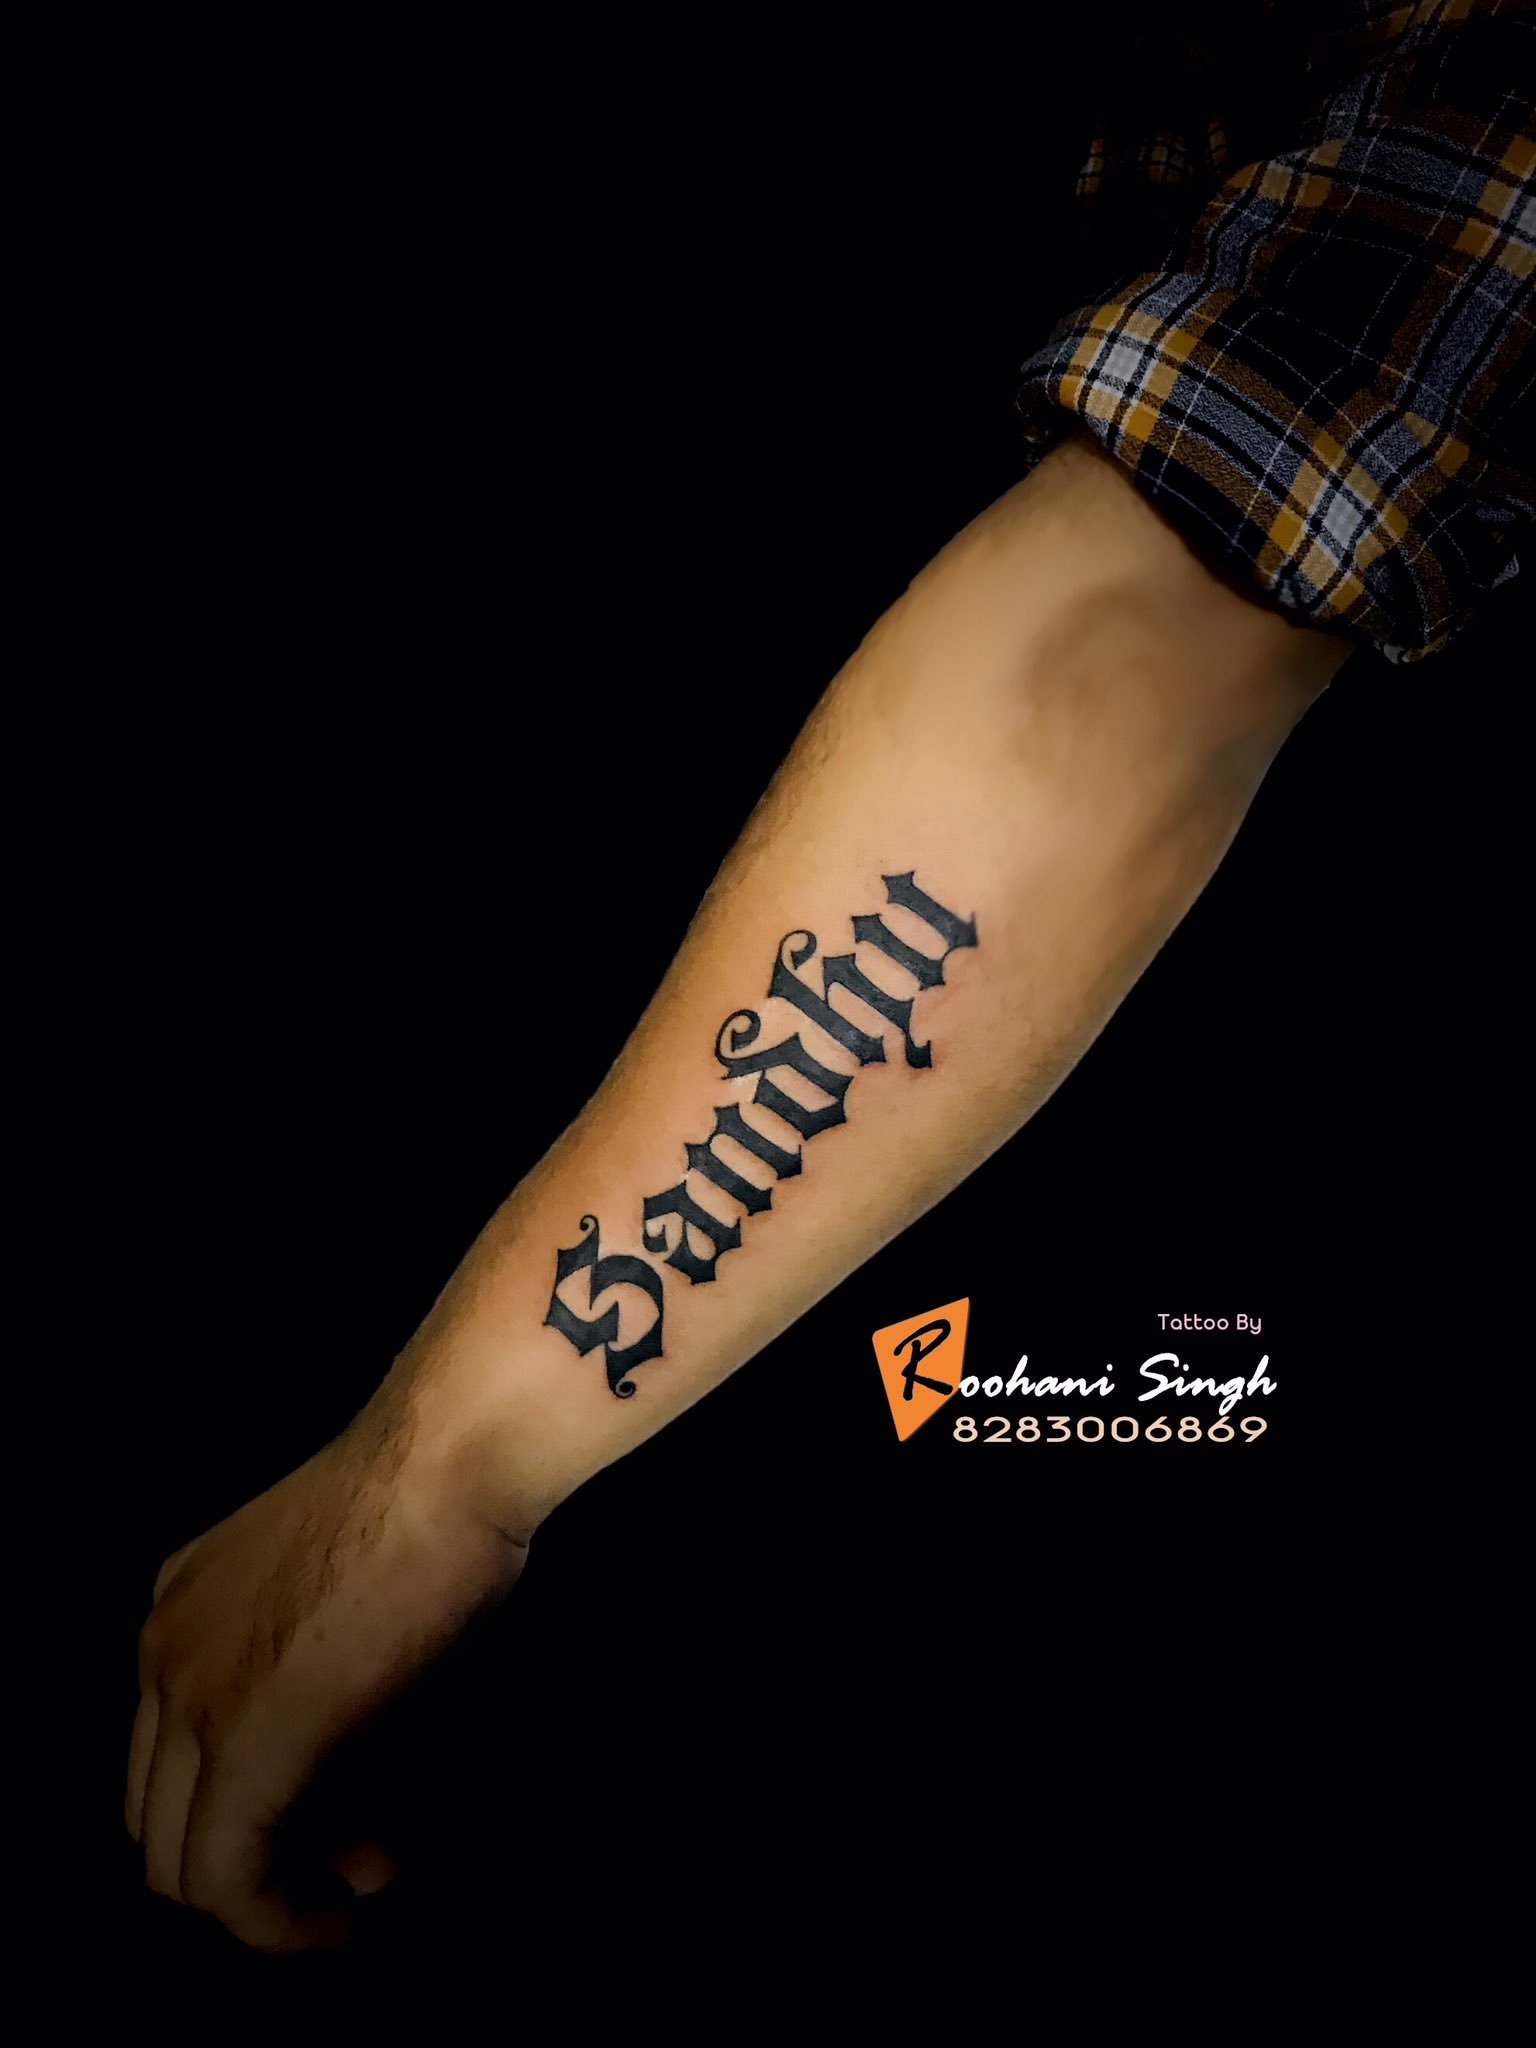 Sandhu name tattoo | By Champs vk-Tattoo Artist | Facebook